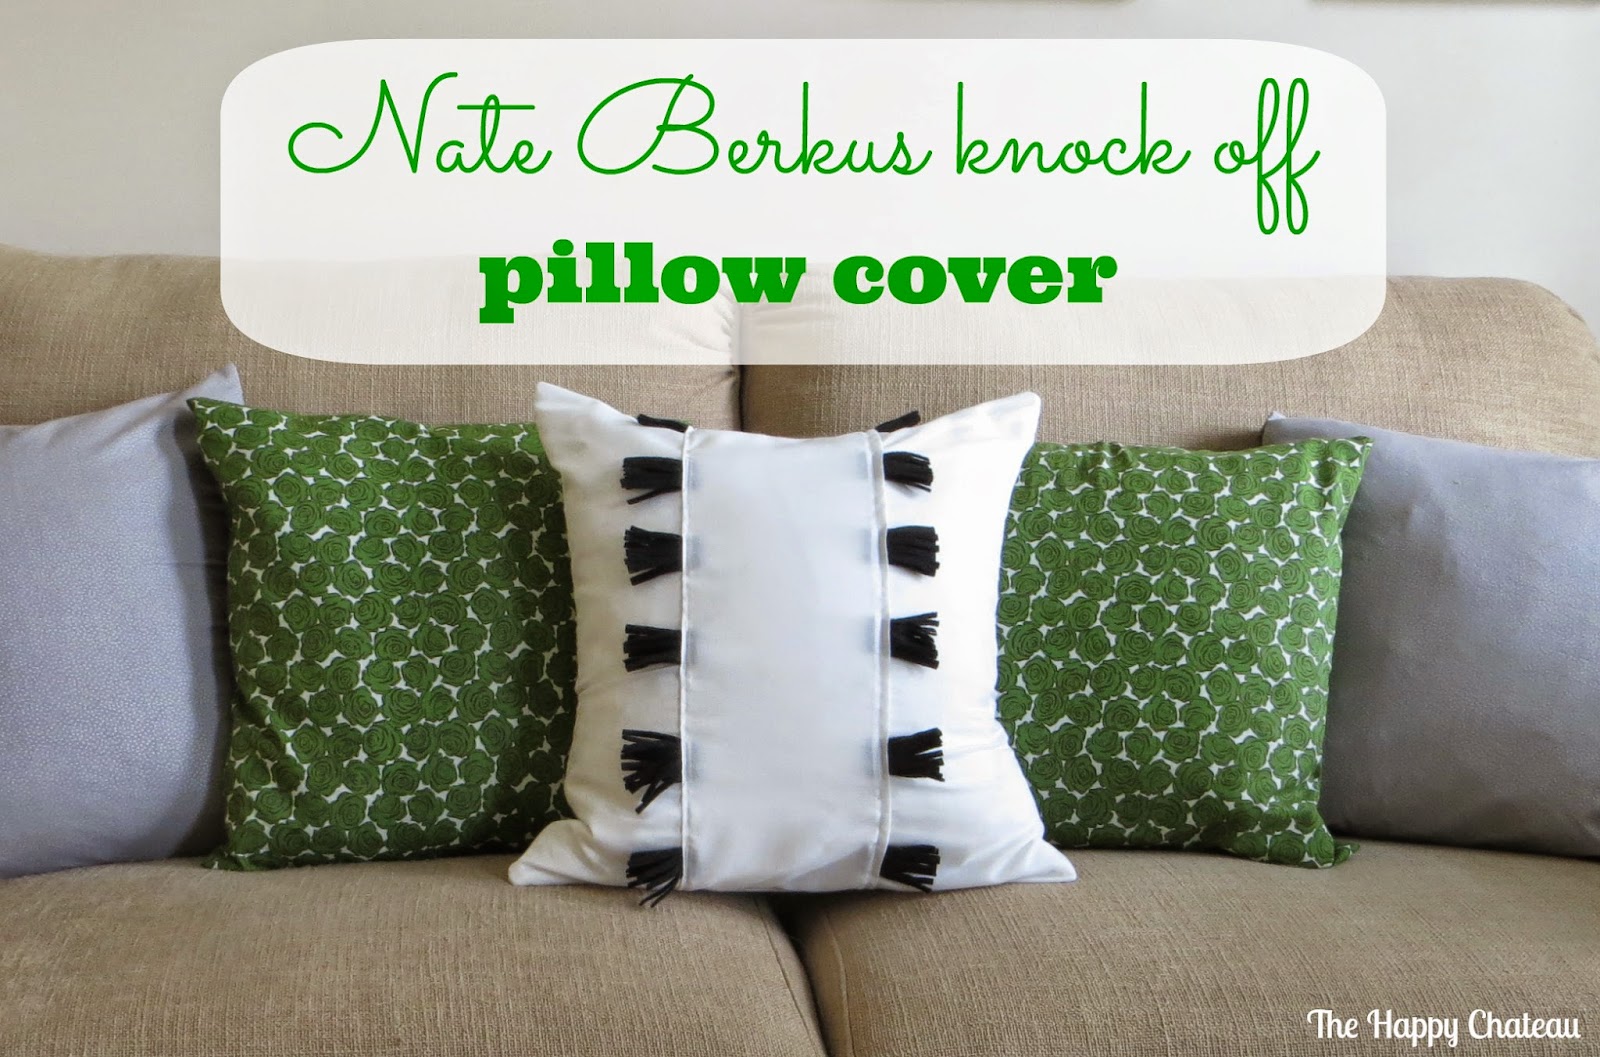 Inspiration Monday Feature - Nate Berkus knock-off pillow cover